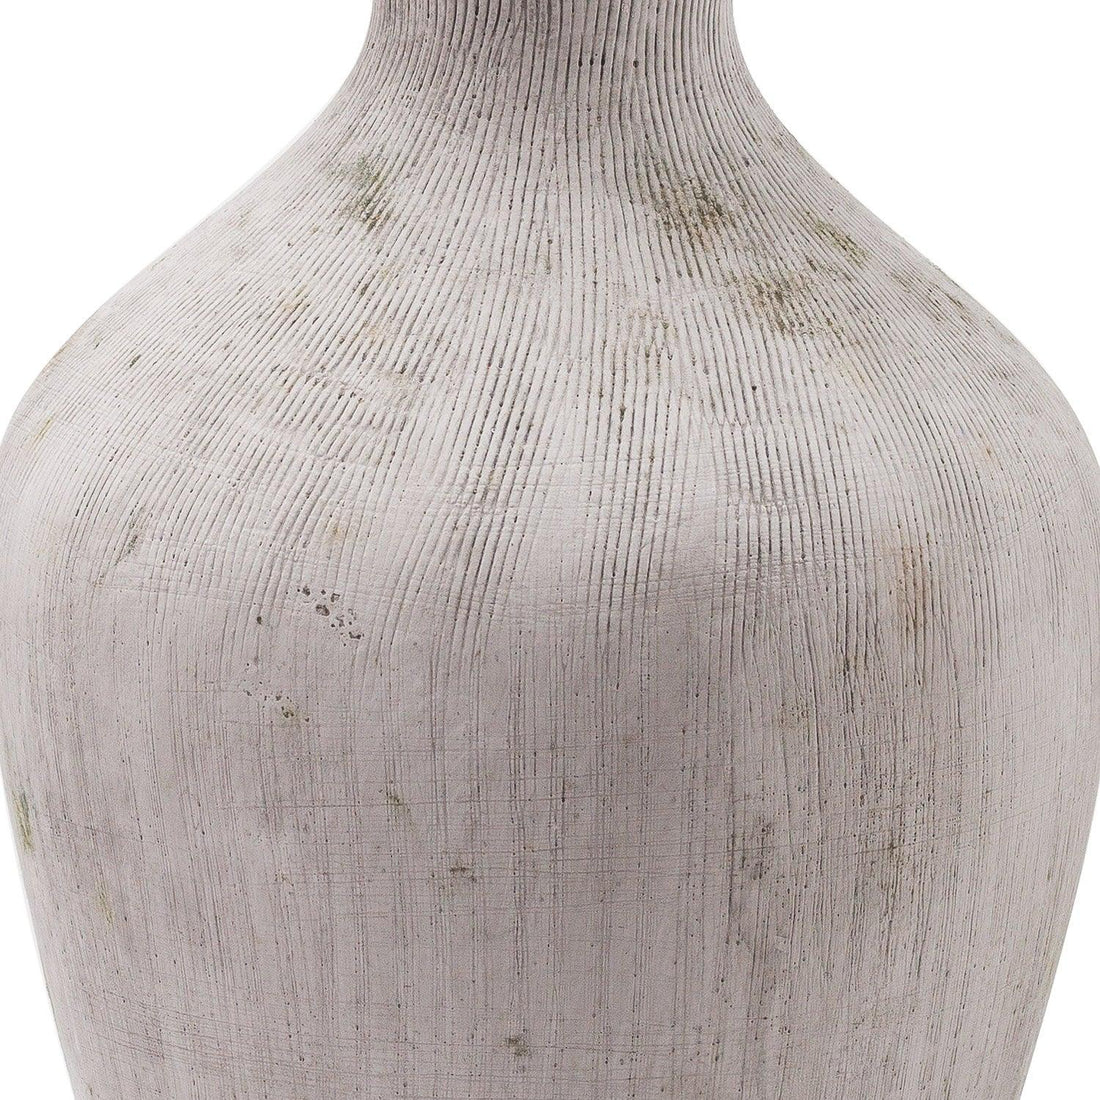 Bloomville Ellipse Stone Vase - £79.95 - Gifts & Accessories > Vases > Hottest Deals 